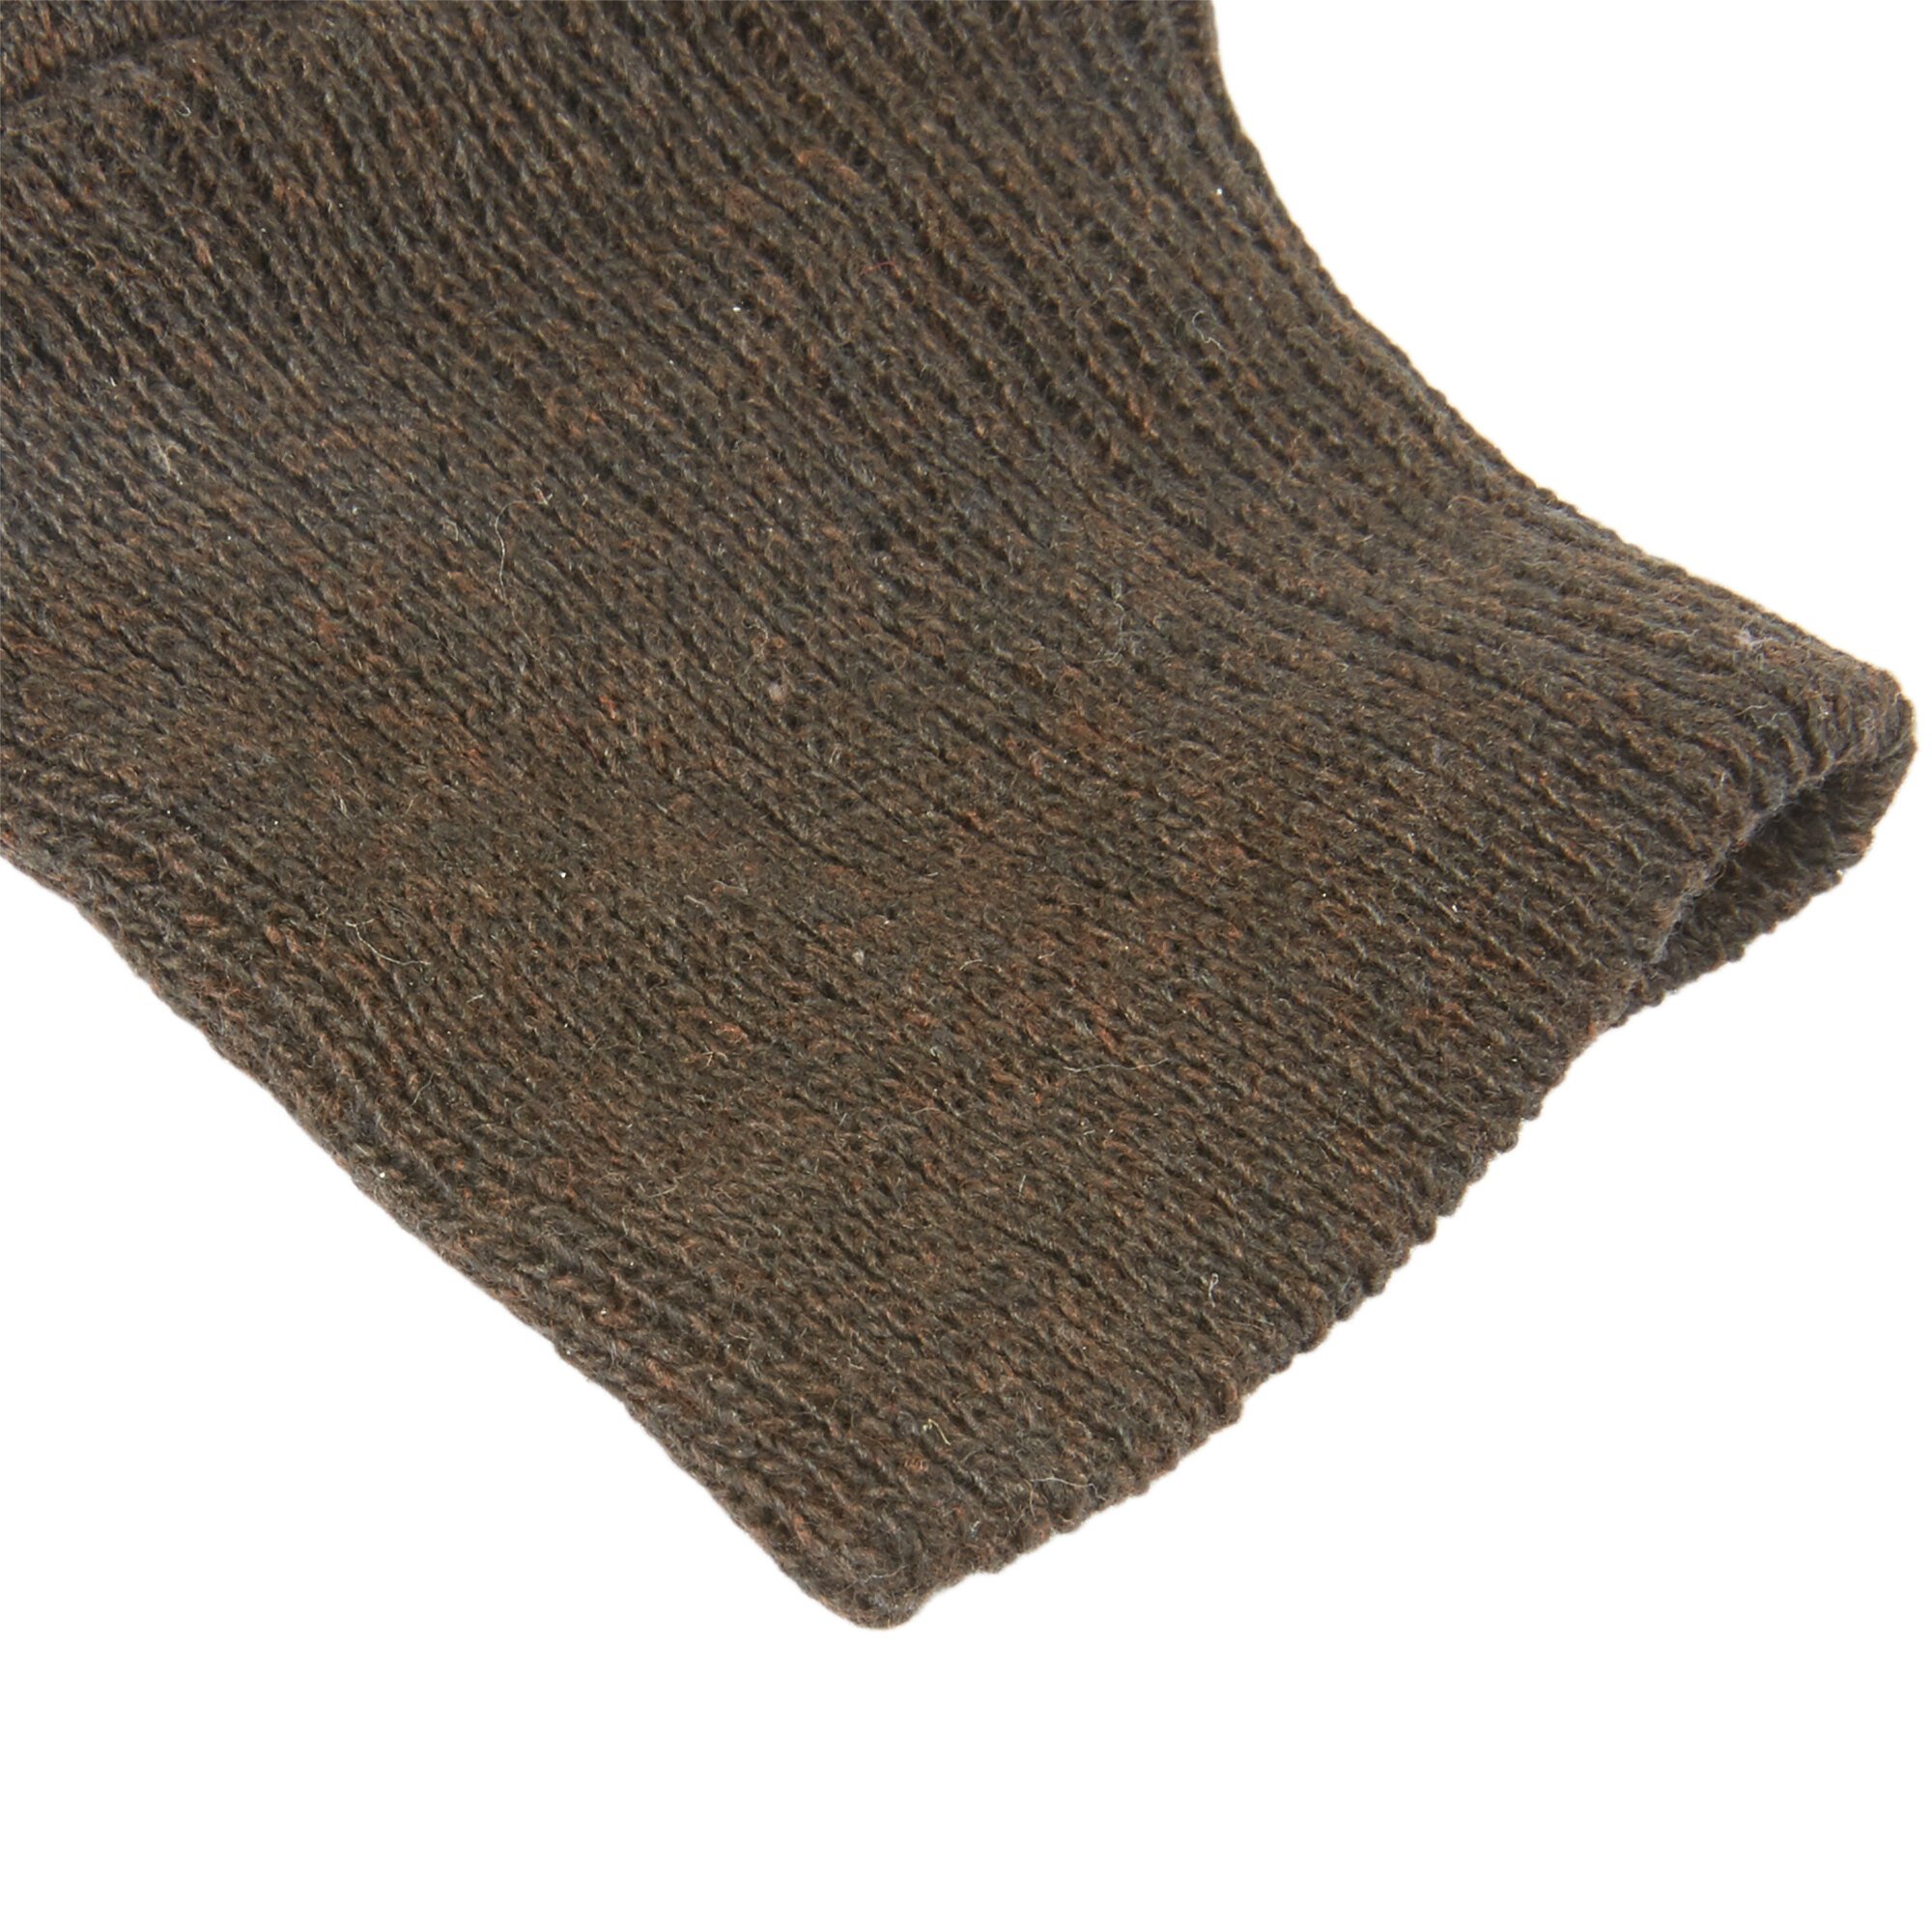 Brown Jersey Gloves, Large - 12/Pack | WebstaurantStore